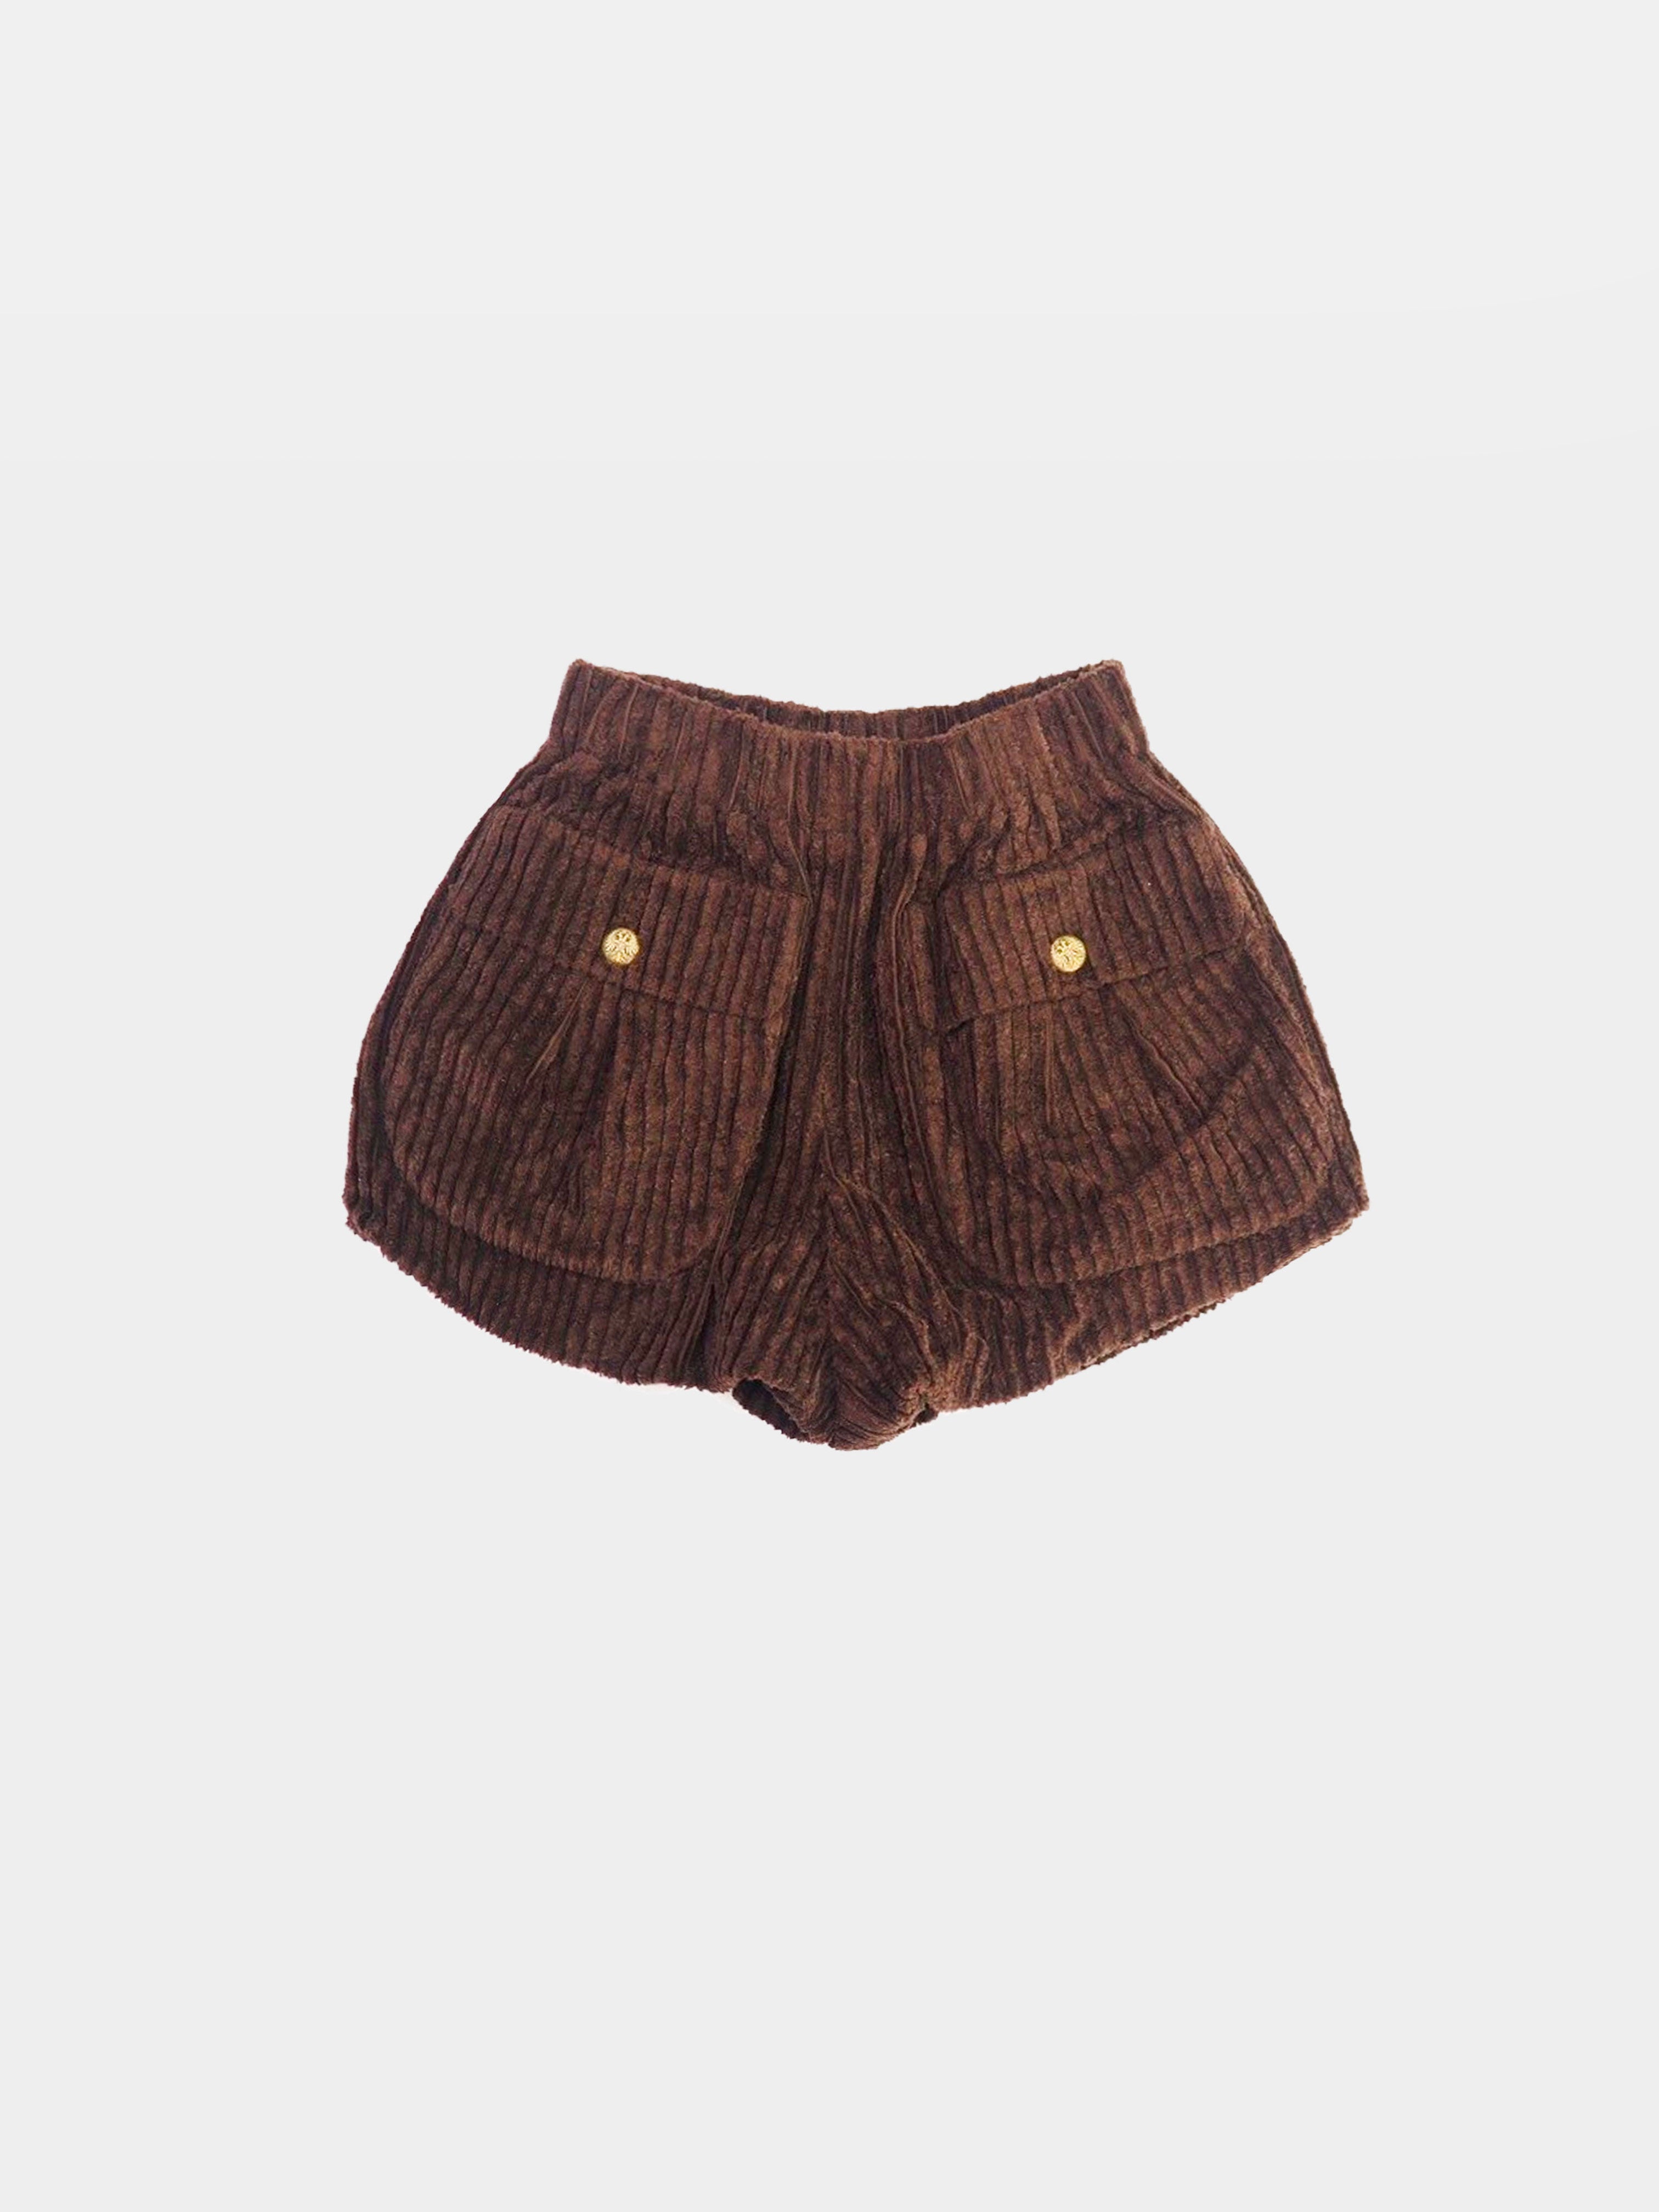 Chanel 1990s Brown Corduroy Rare Shorts